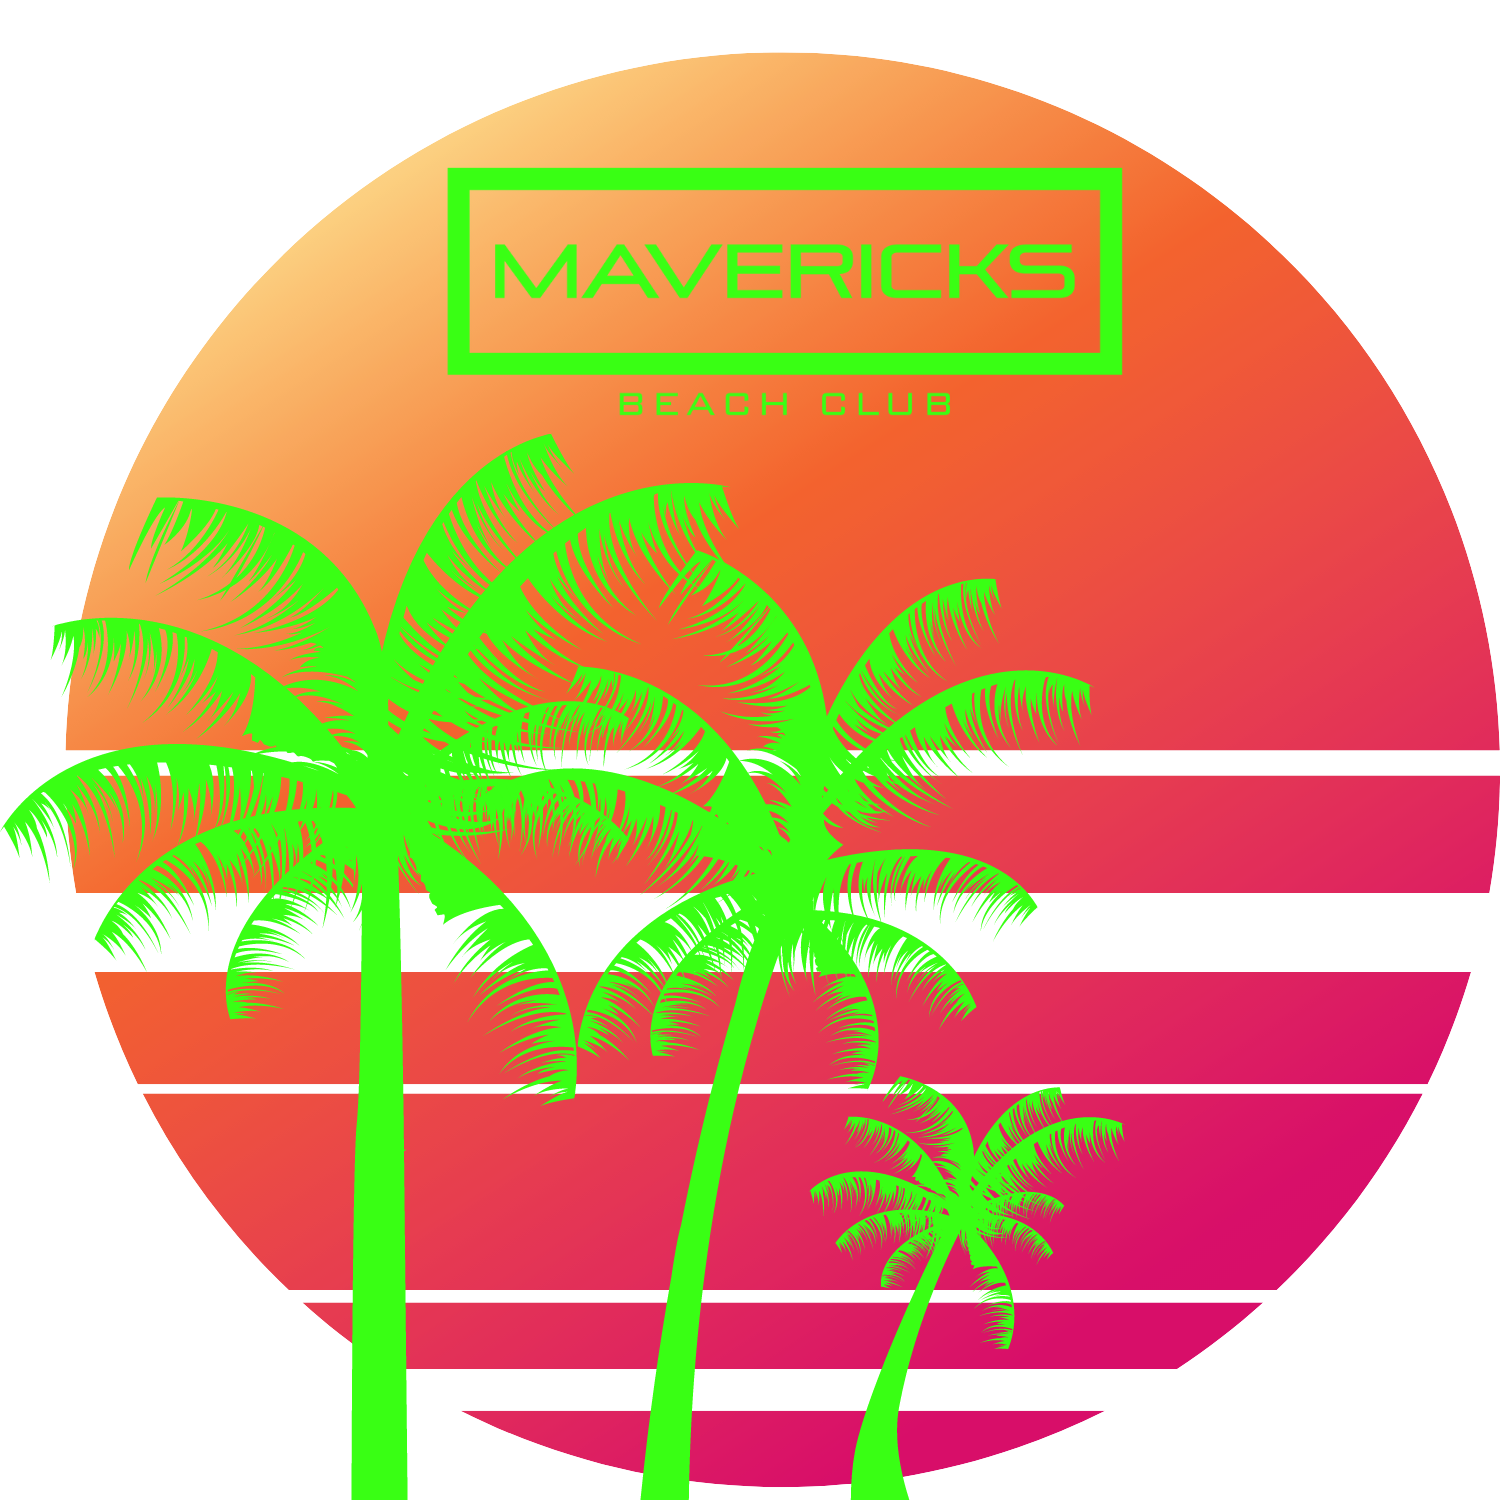 mavericks beach club merch, neon, neon collection, san diego, california